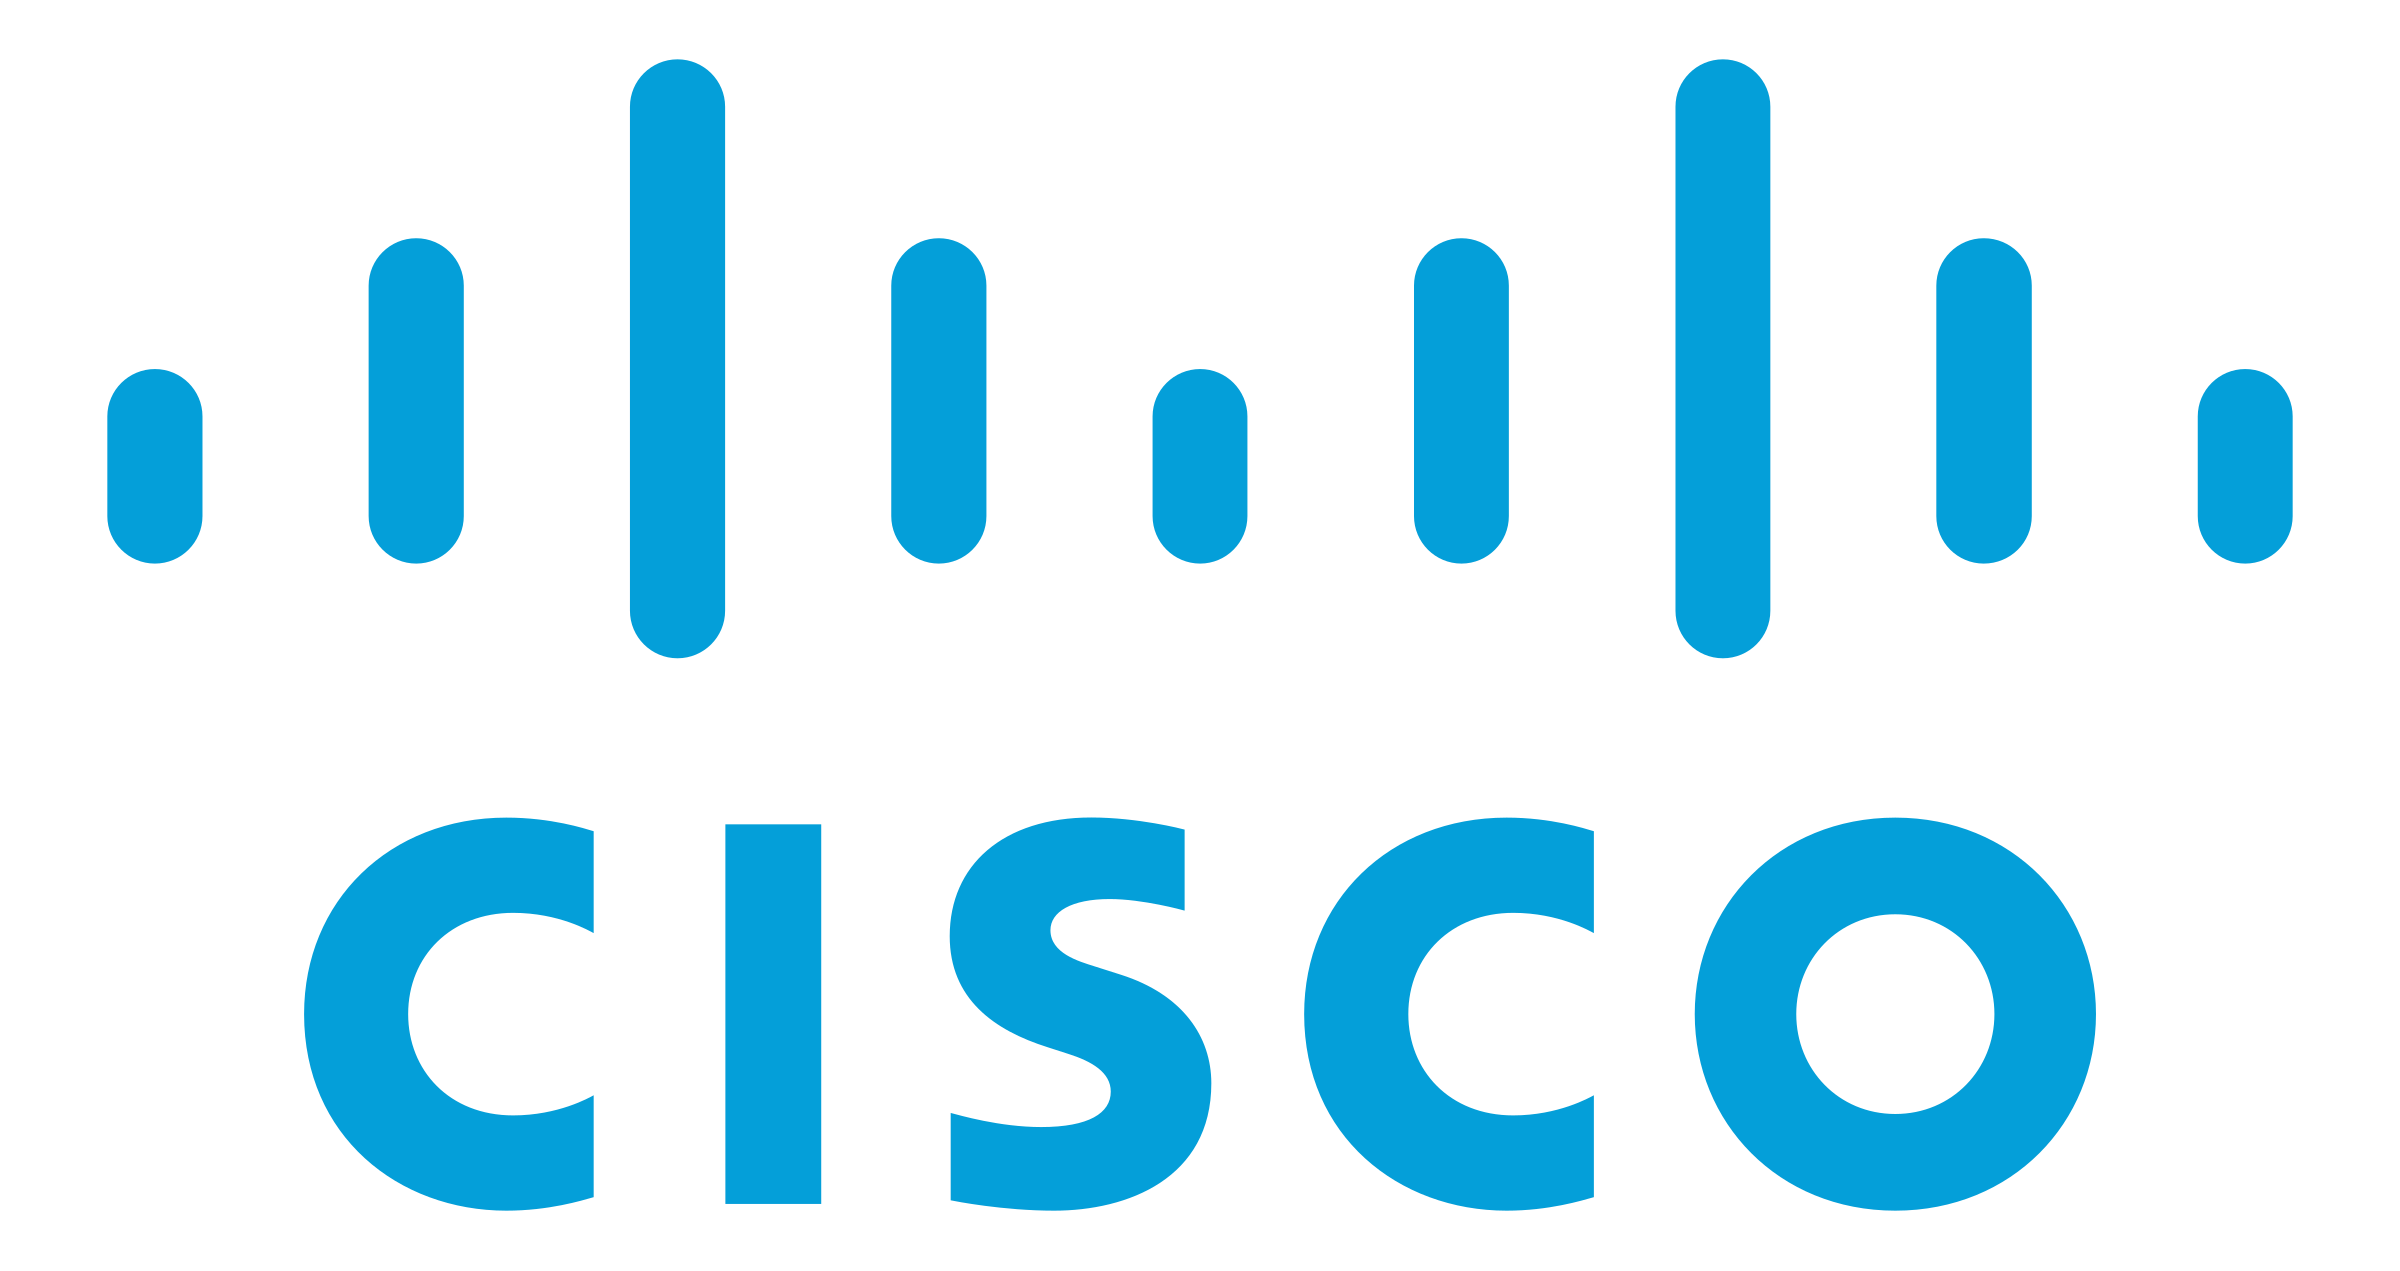 CSCvt48205 - Turin CR: CTE is failing to meet Class B ... - Cisco Bug